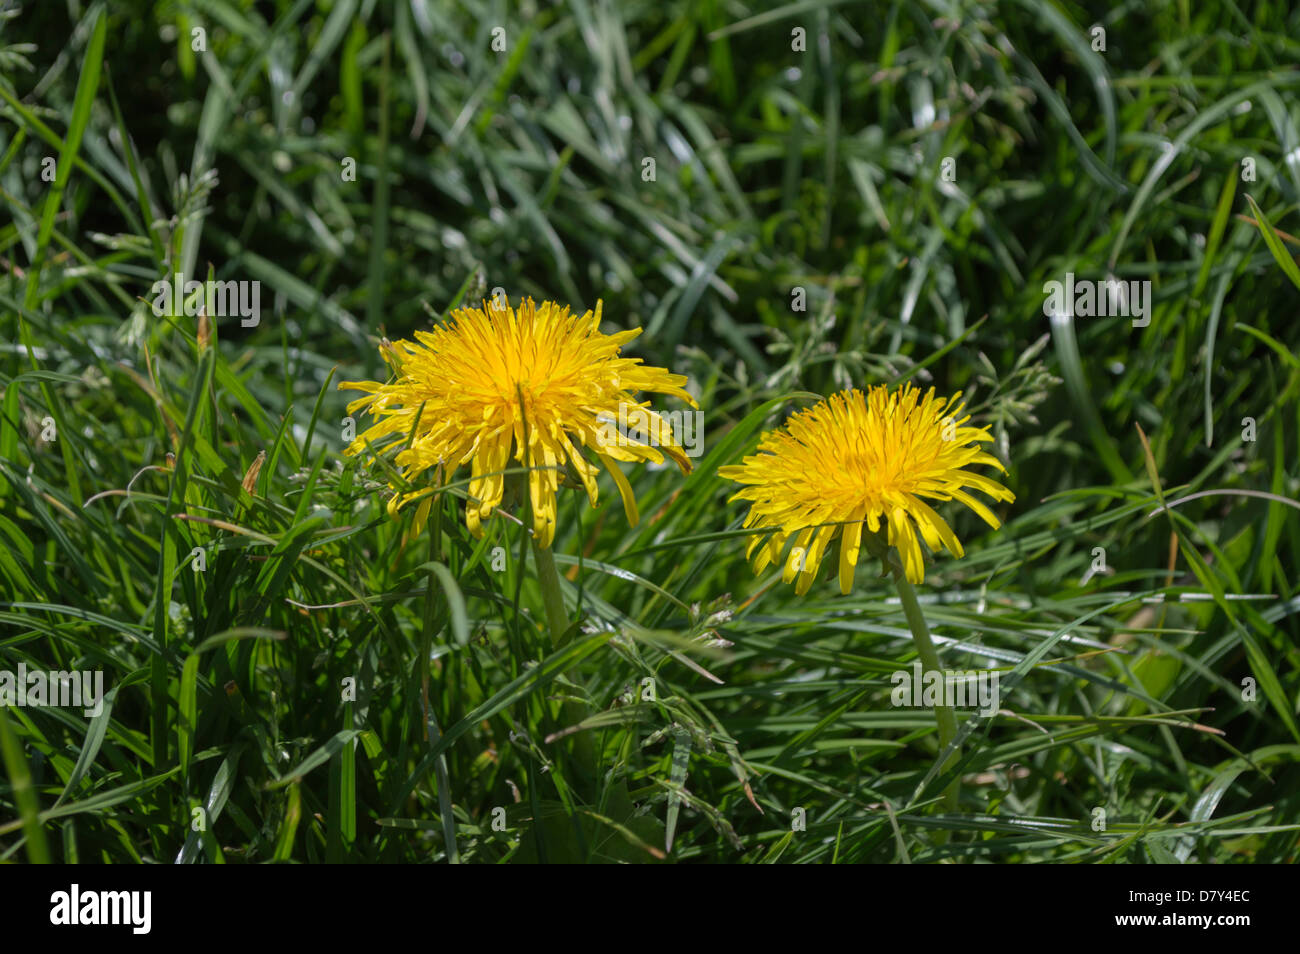 dandelion Taraxacum officinalis in green grass Stock Photo